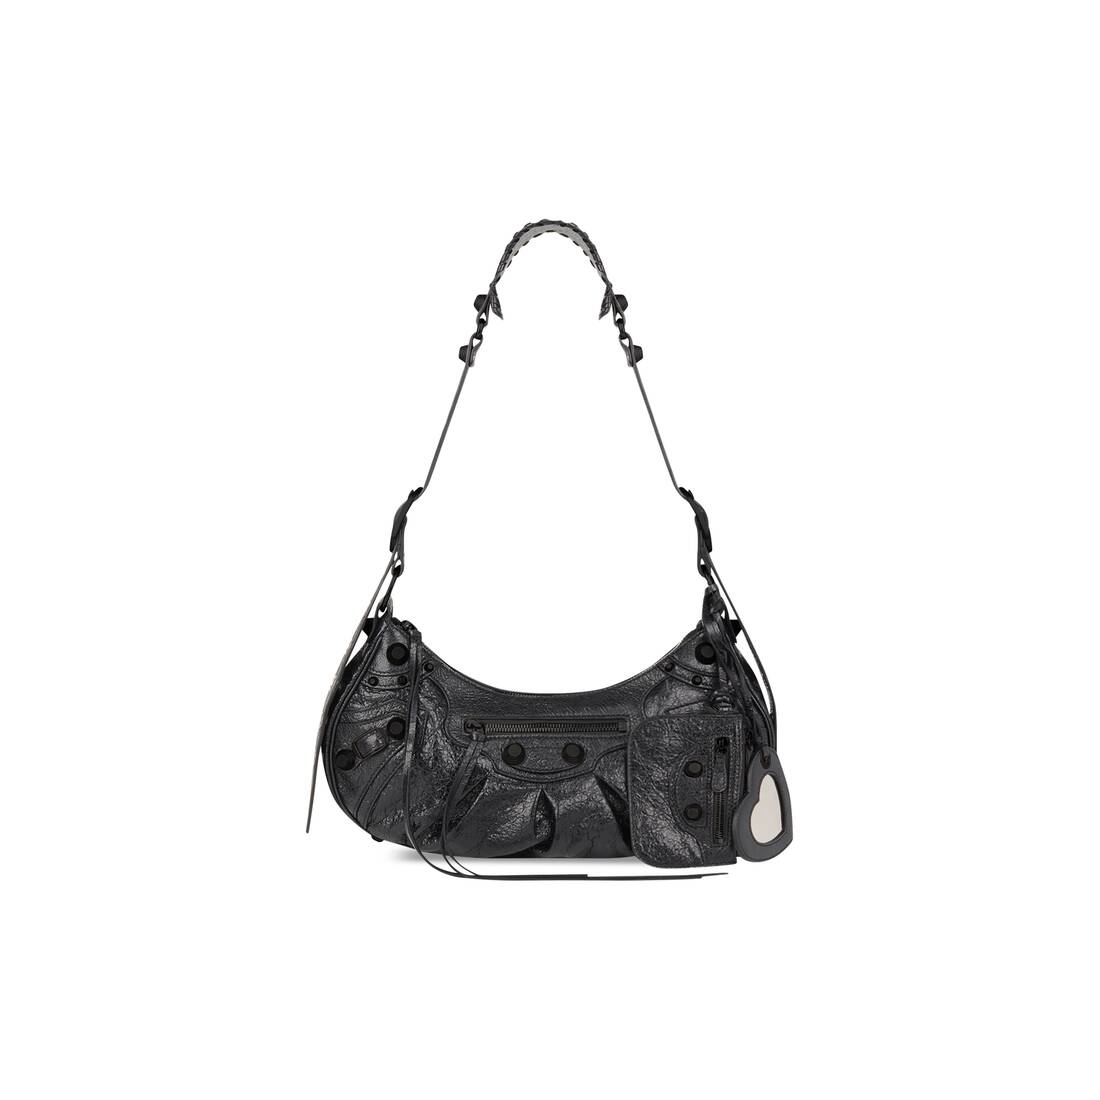 Balenciaga City Bags  Handbags for Women  Authenticity Guaranteed  eBay